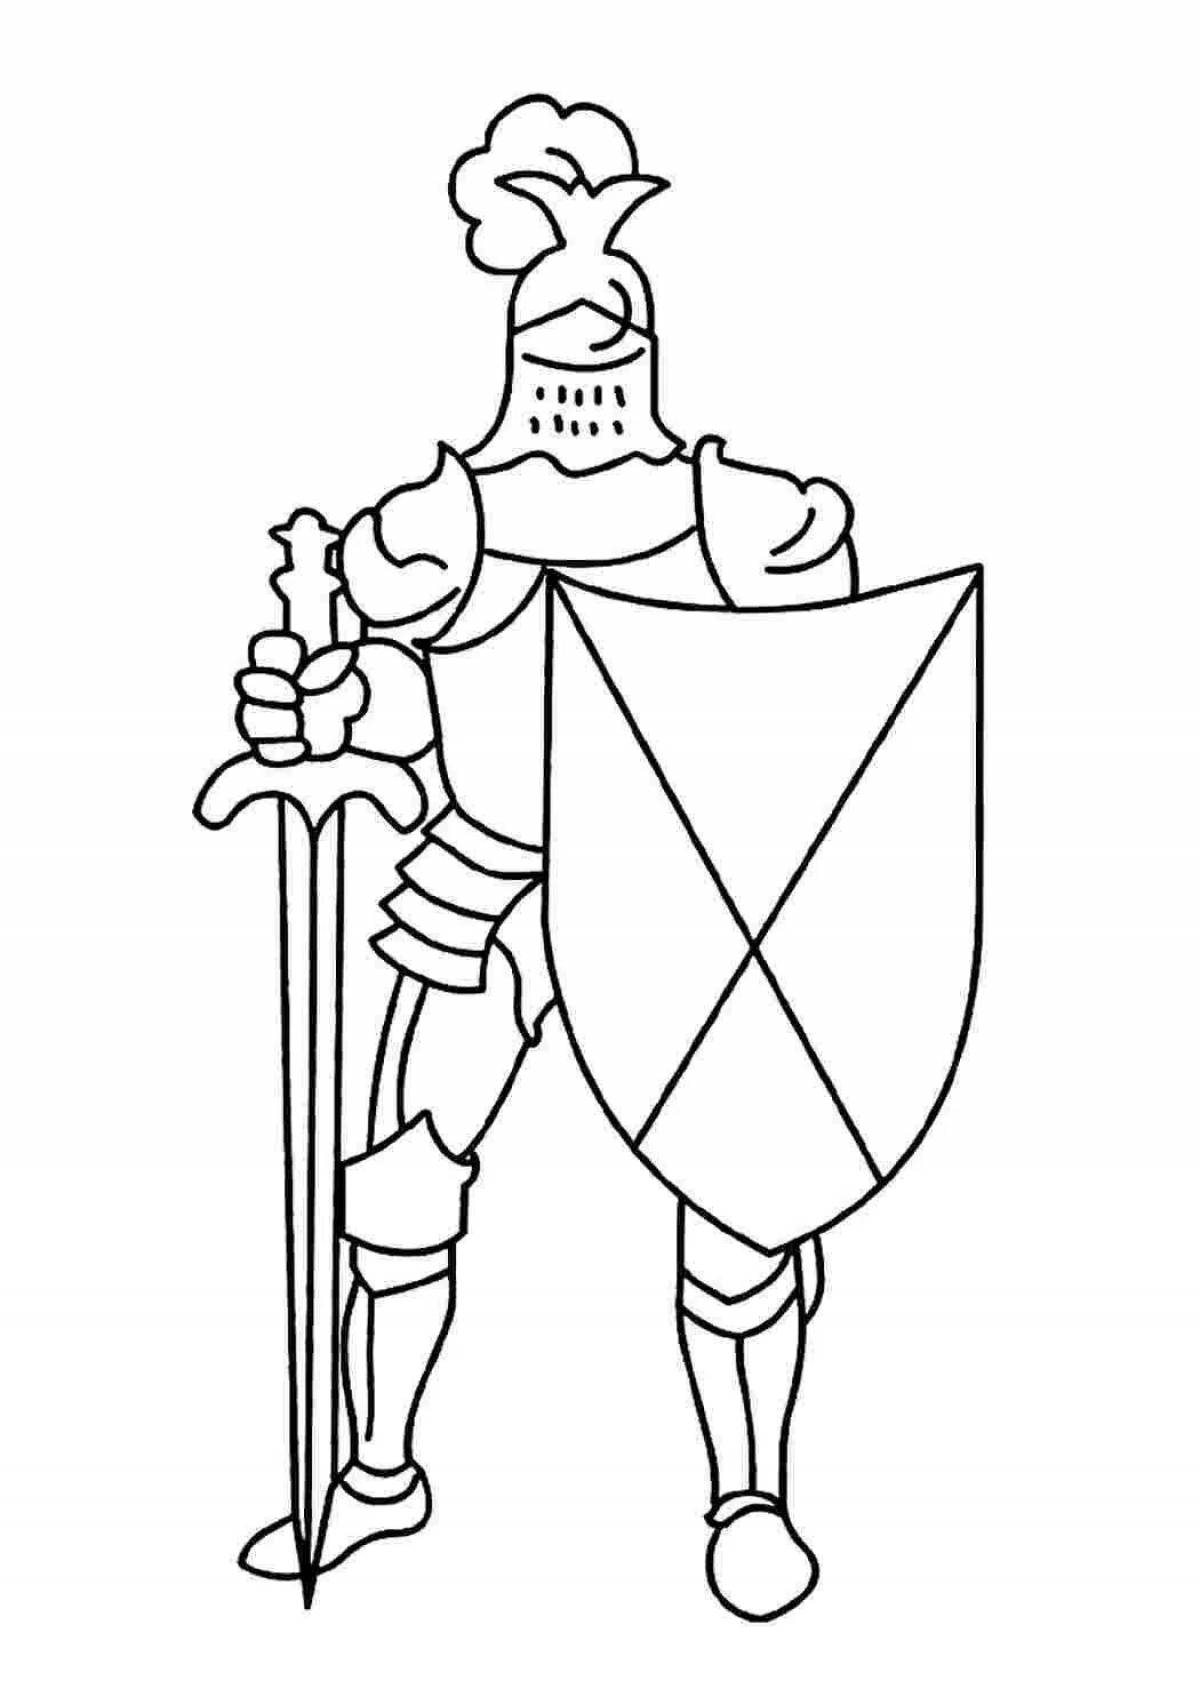 Daring armor knight coloring book